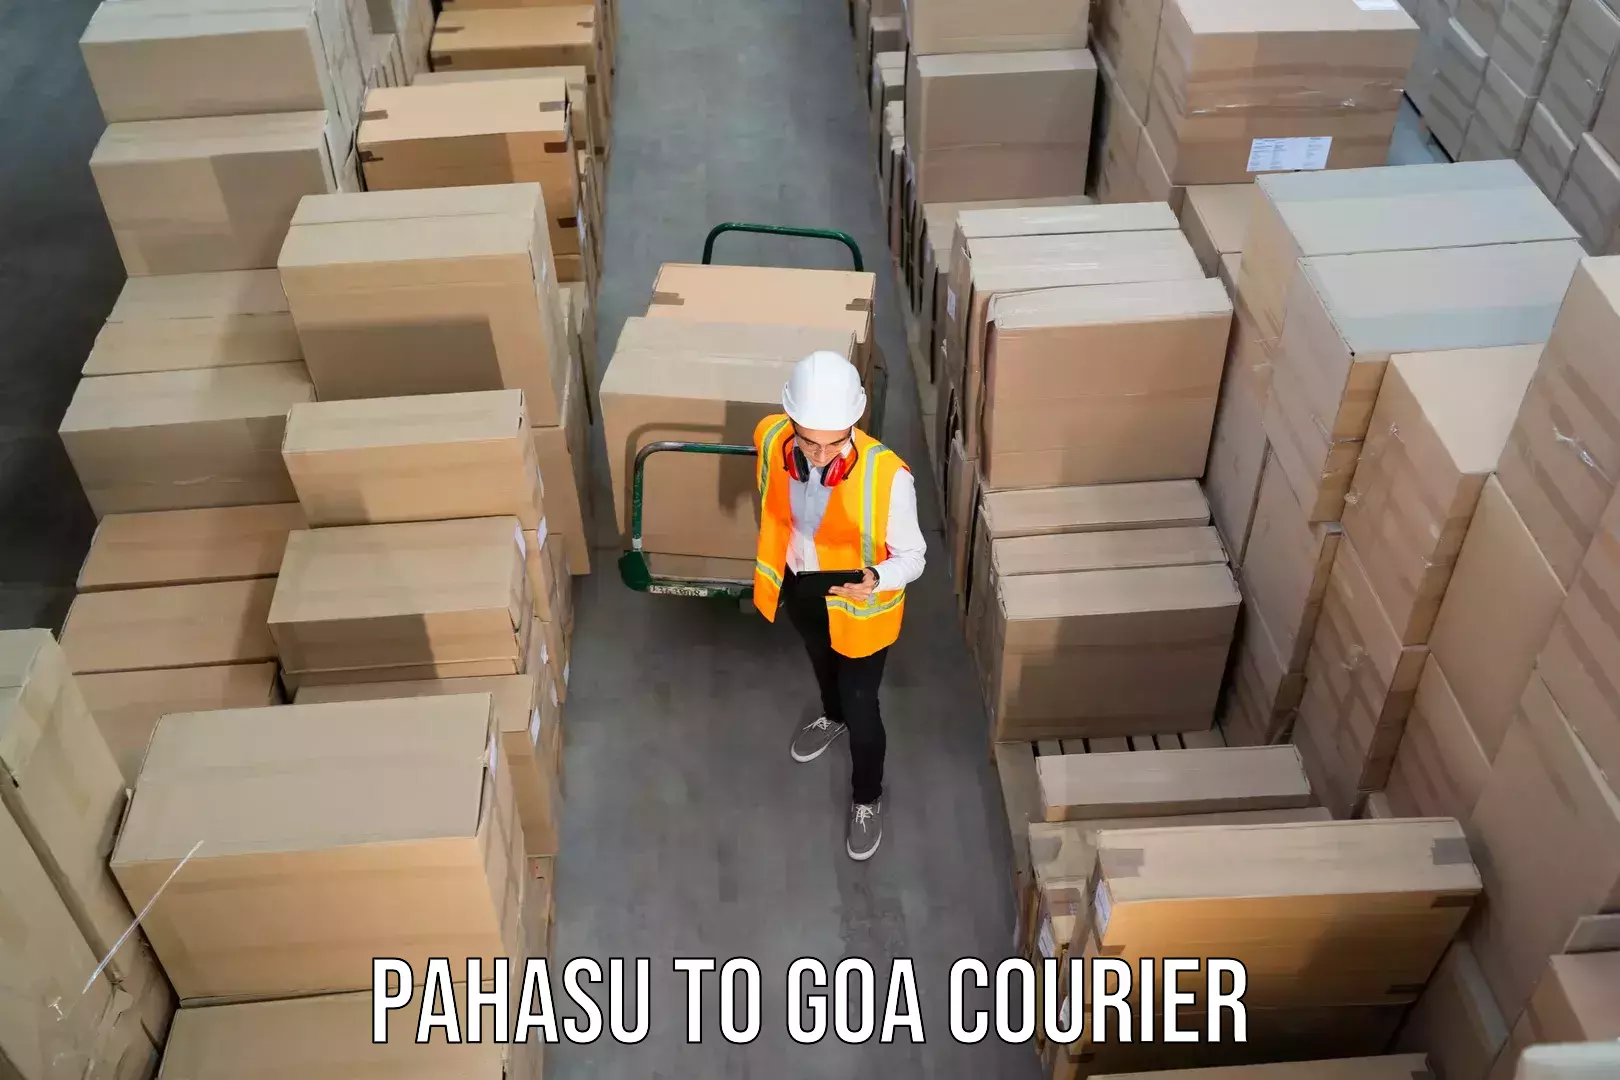 Courier service comparison in Pahasu to Panaji